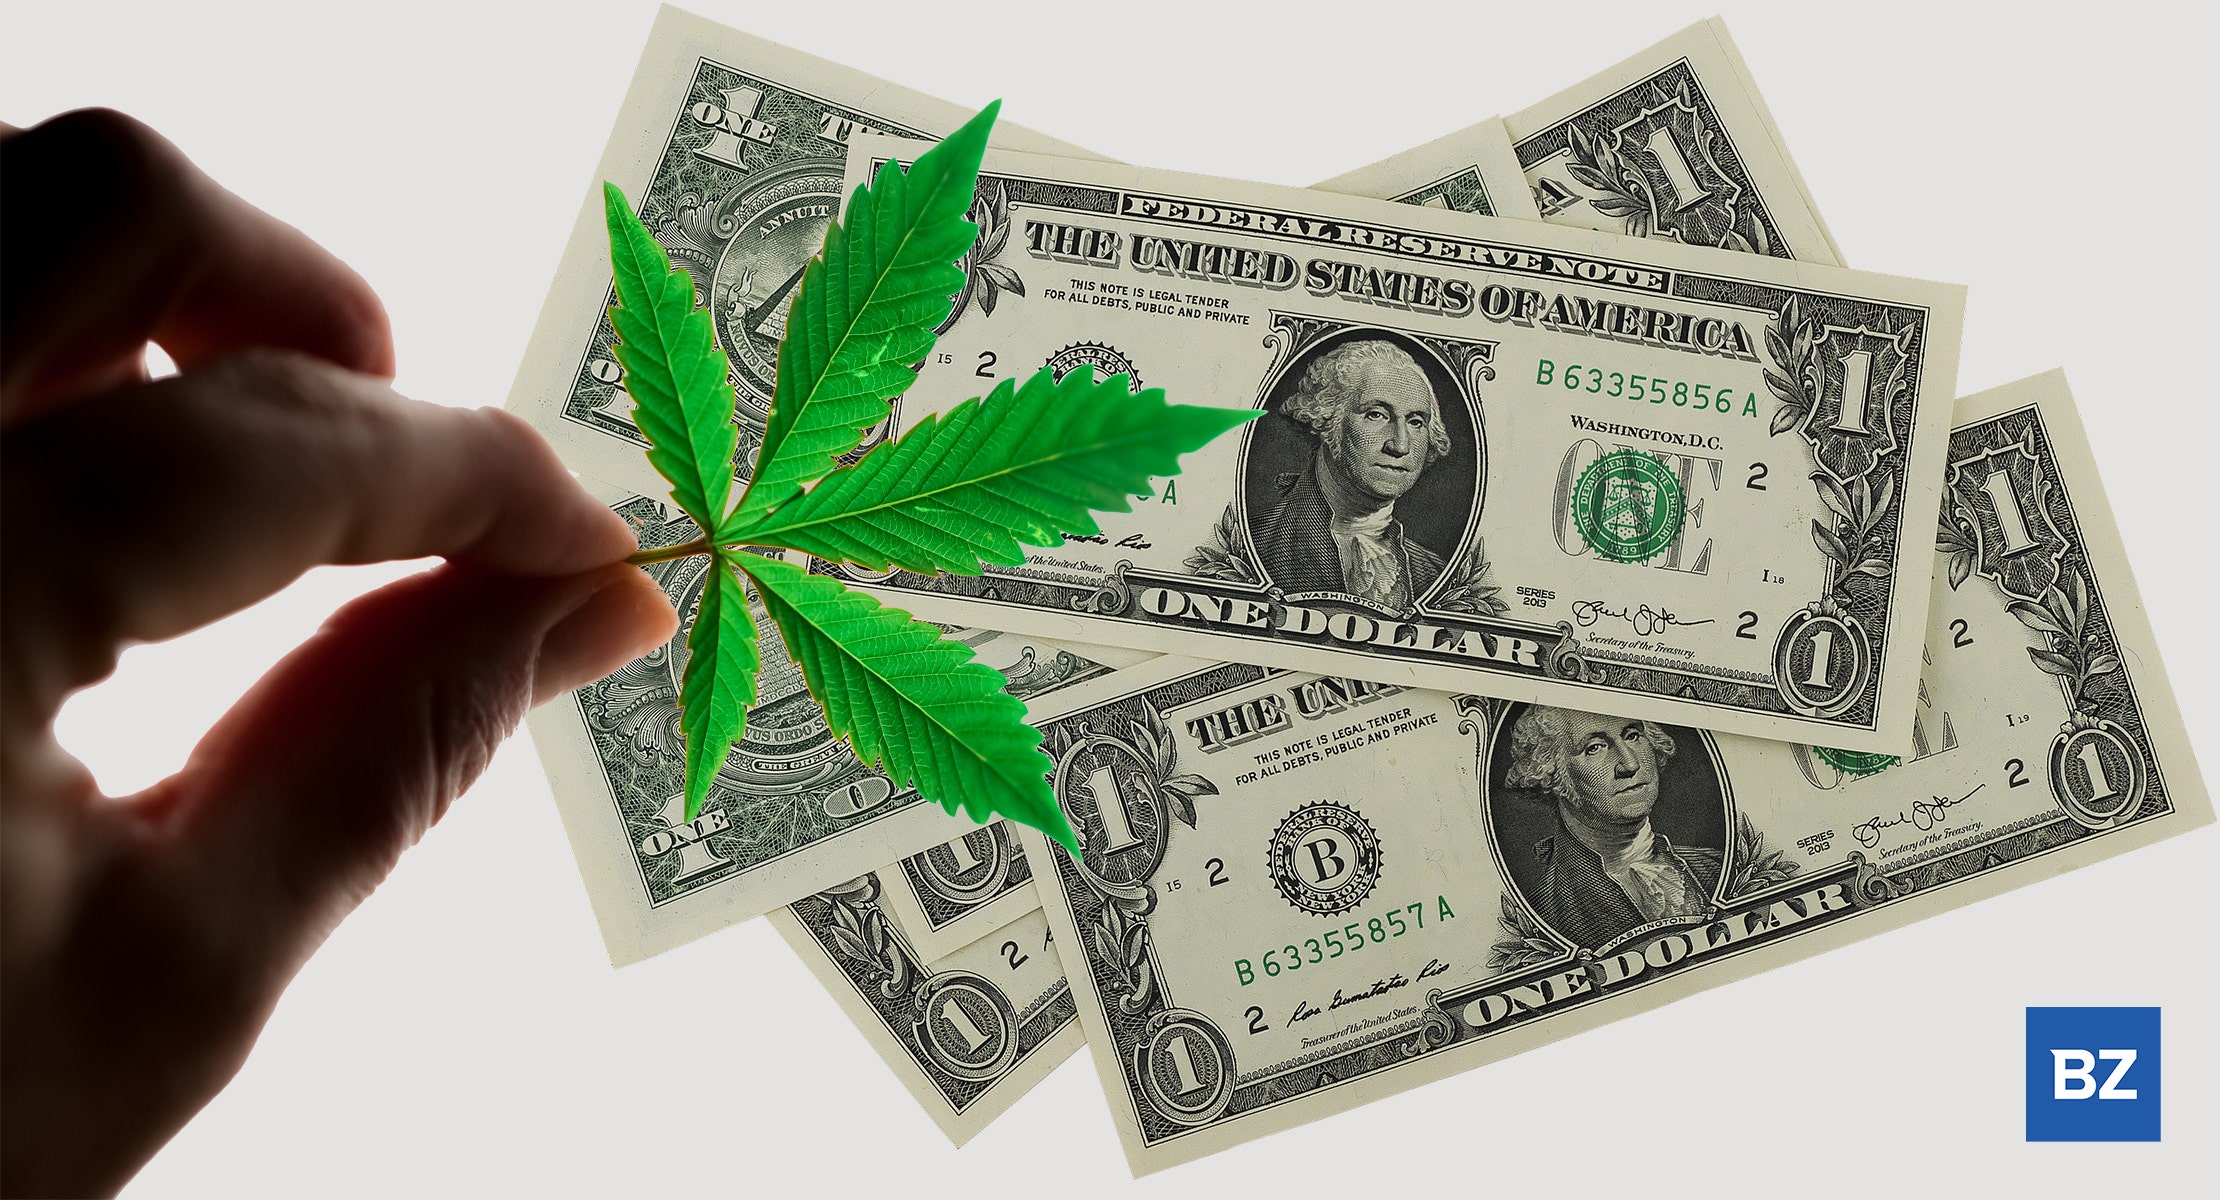 Akerna Report: Halloween Cannabis Sales Grew 6%YoY, Reaching Almost $250M